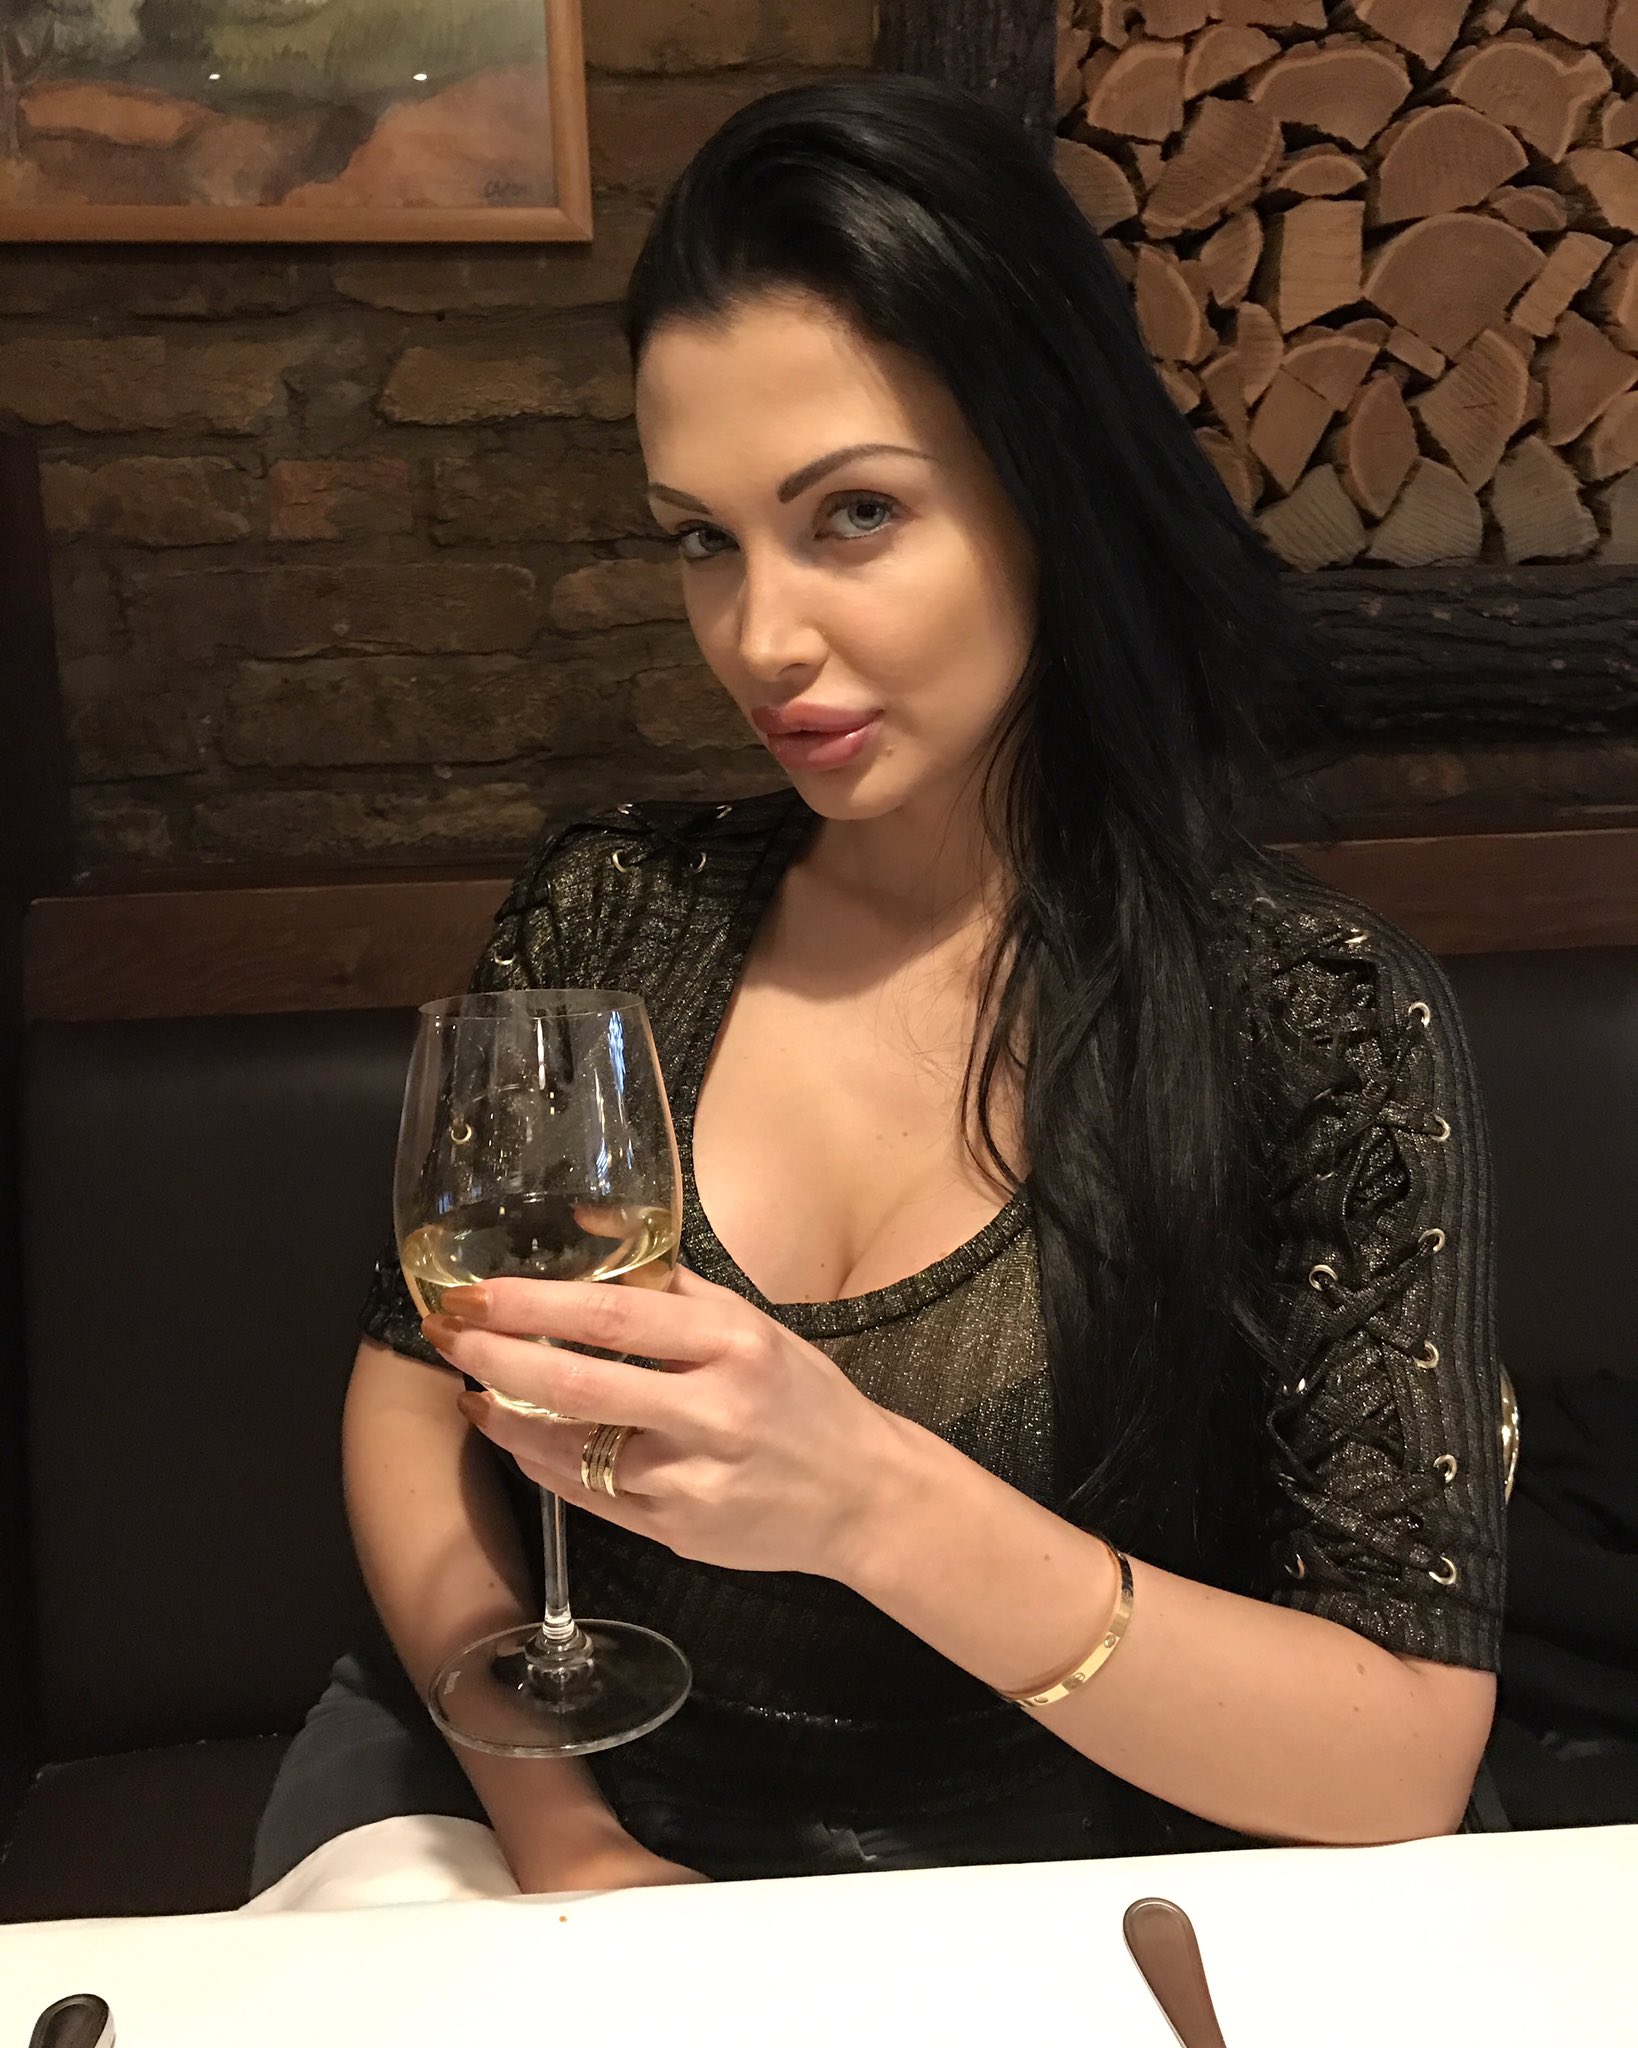 Enjoying some Italian food&wine. https://t.co/aSpnbJlp5d